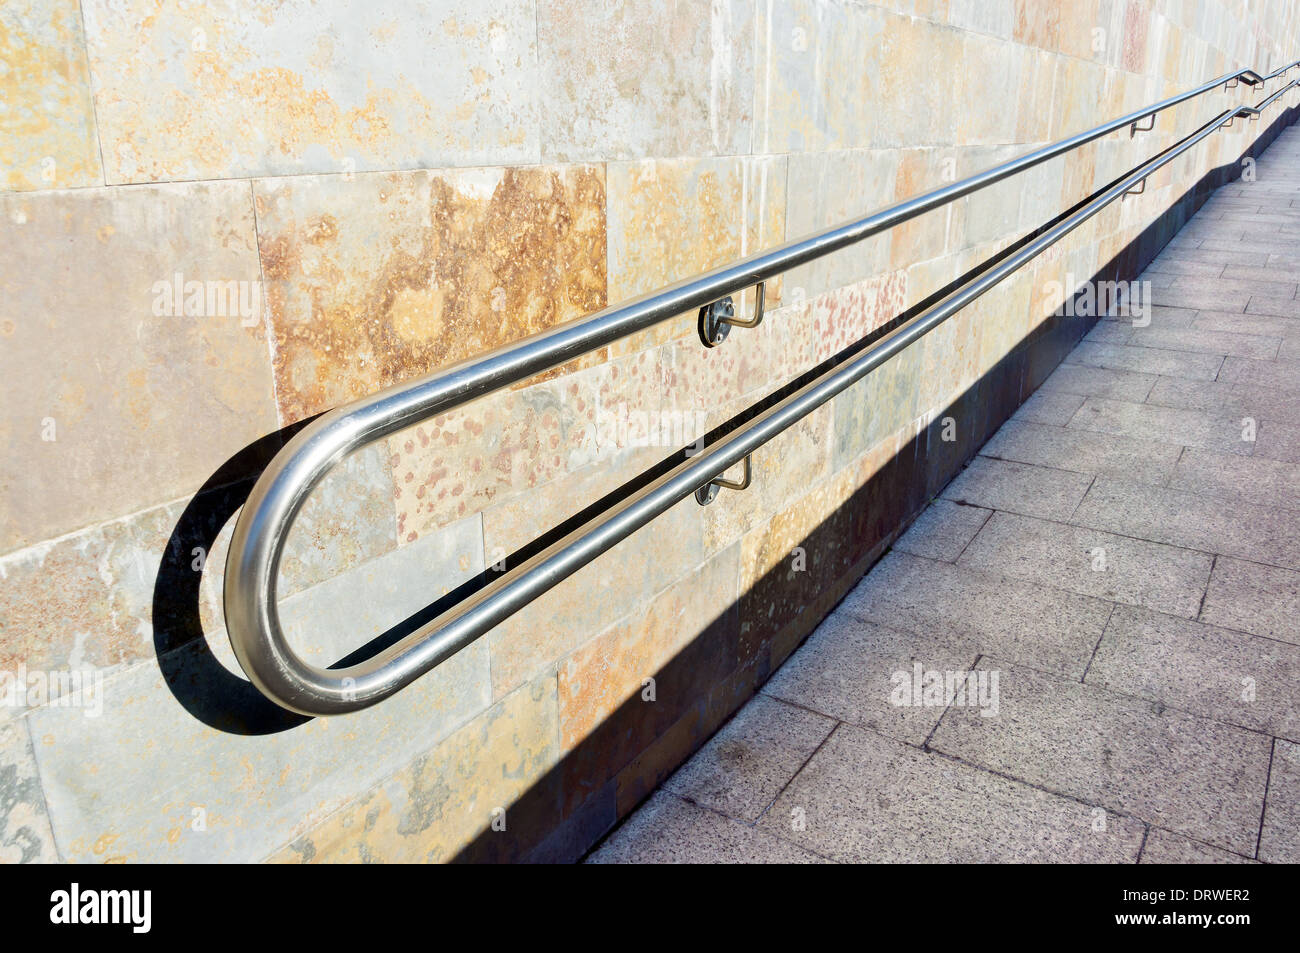 metal railings on a slope of pedestrian walkway Stock Photo